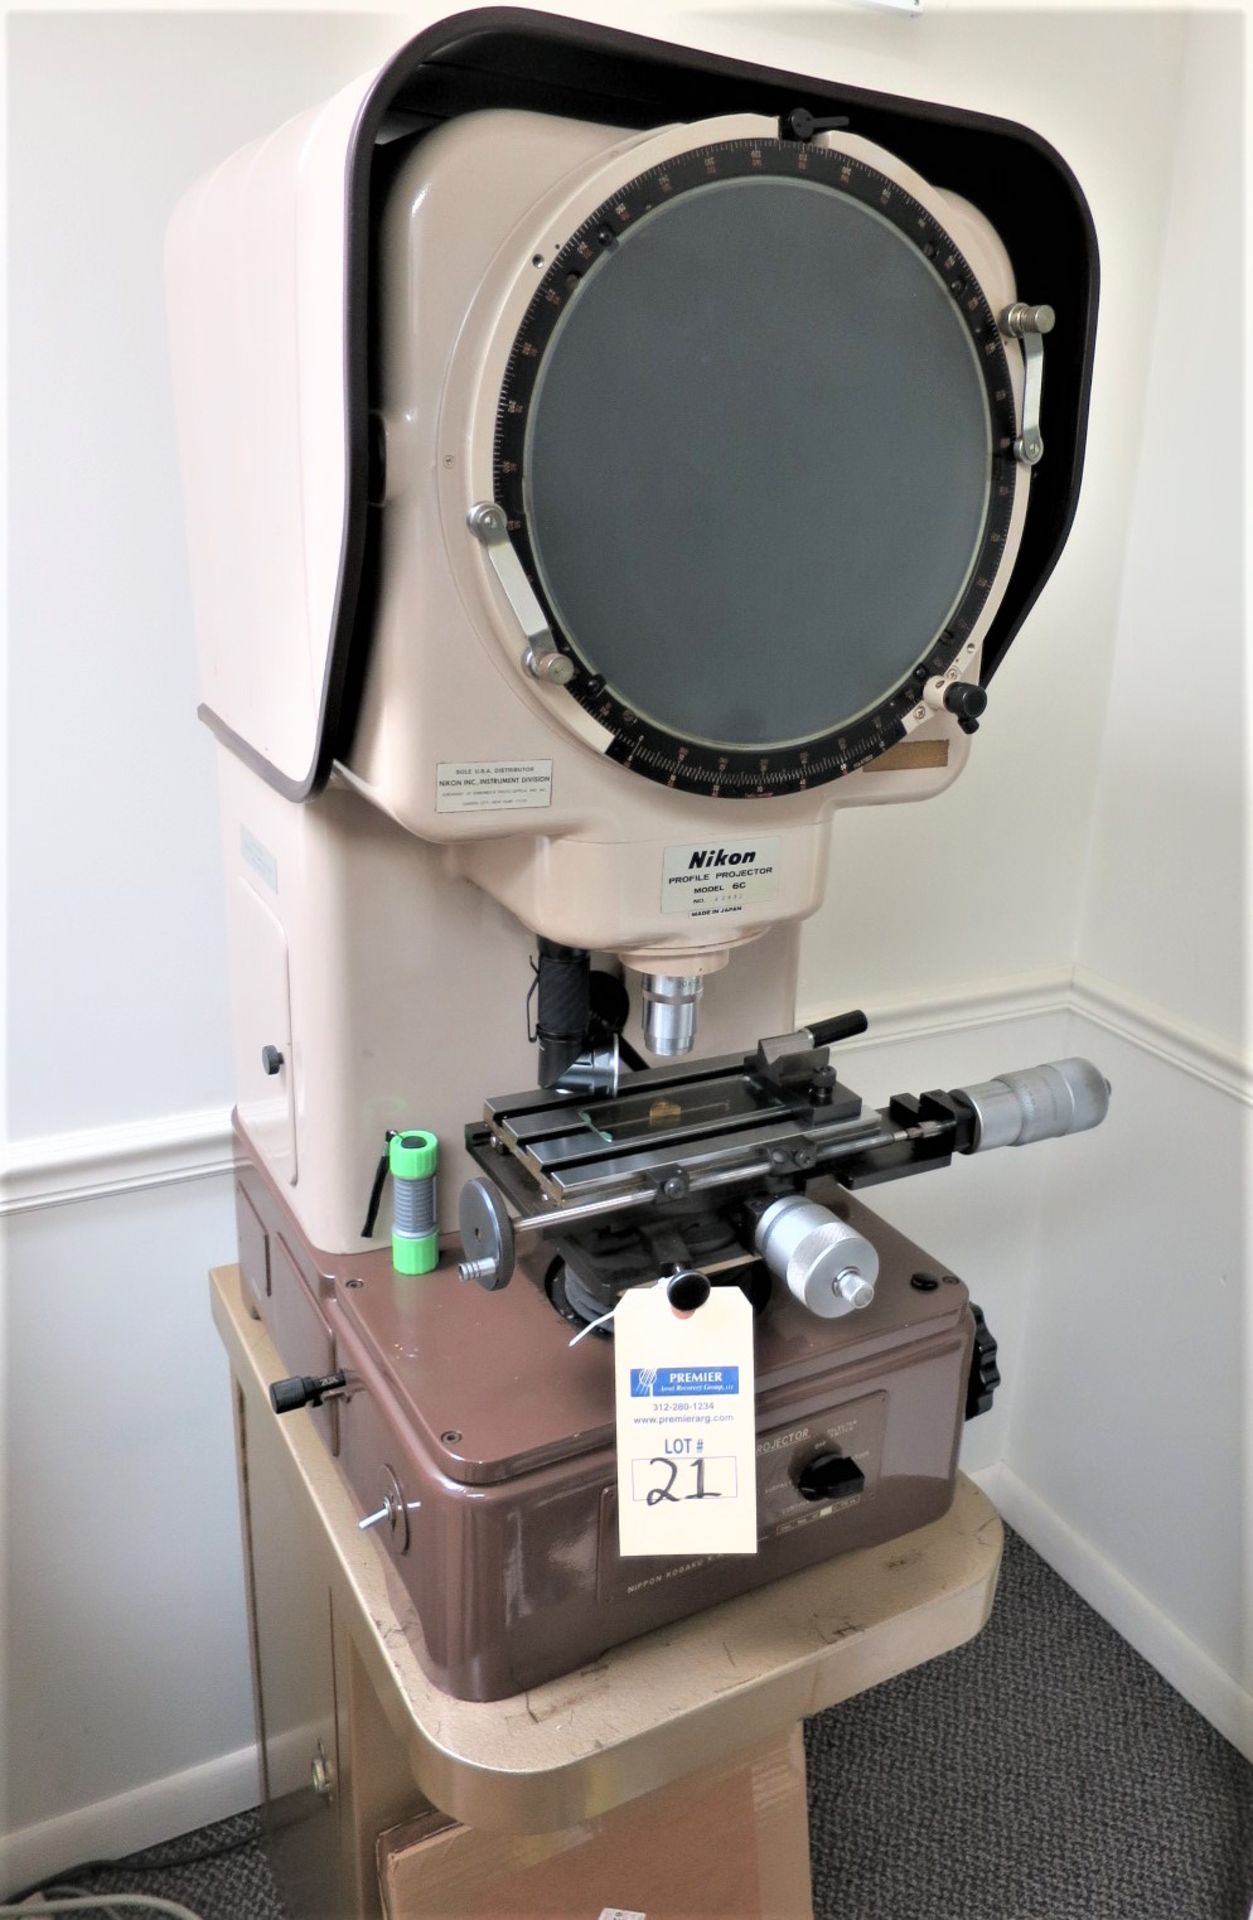 Nikon Profile Projector Optical Comparator Model 6C, SN 42832